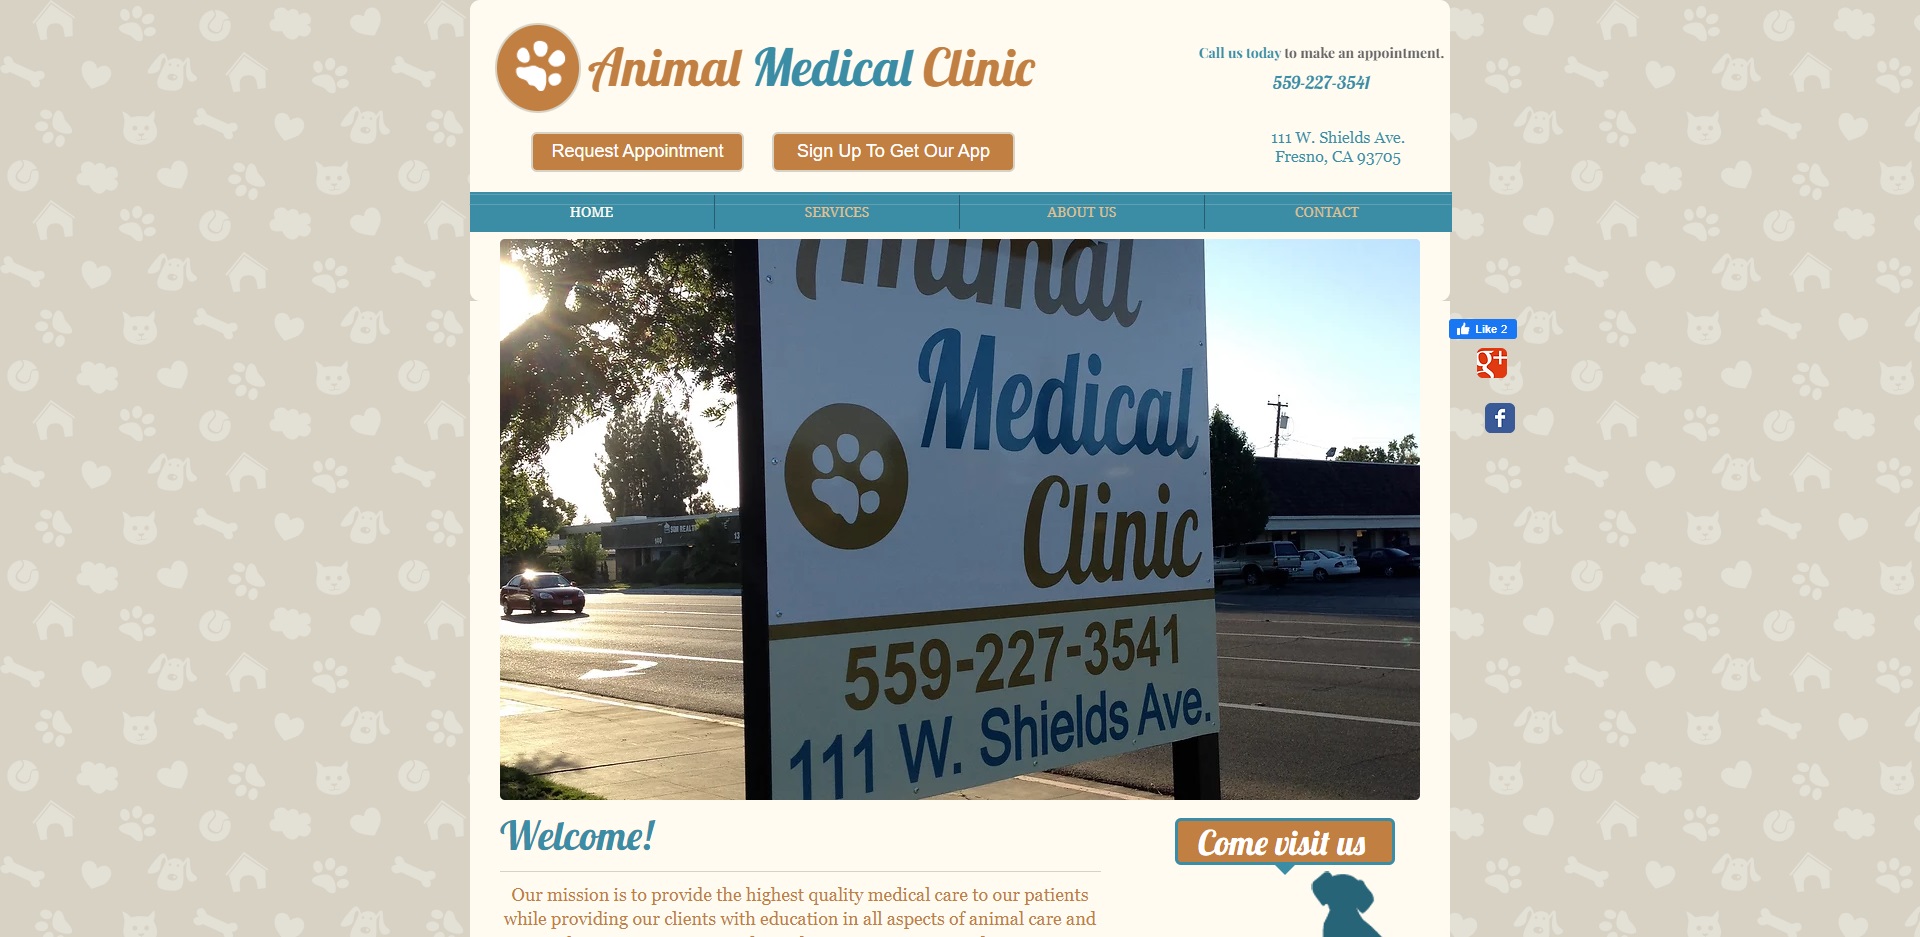 Best Pet Care Center in Fresno, CA